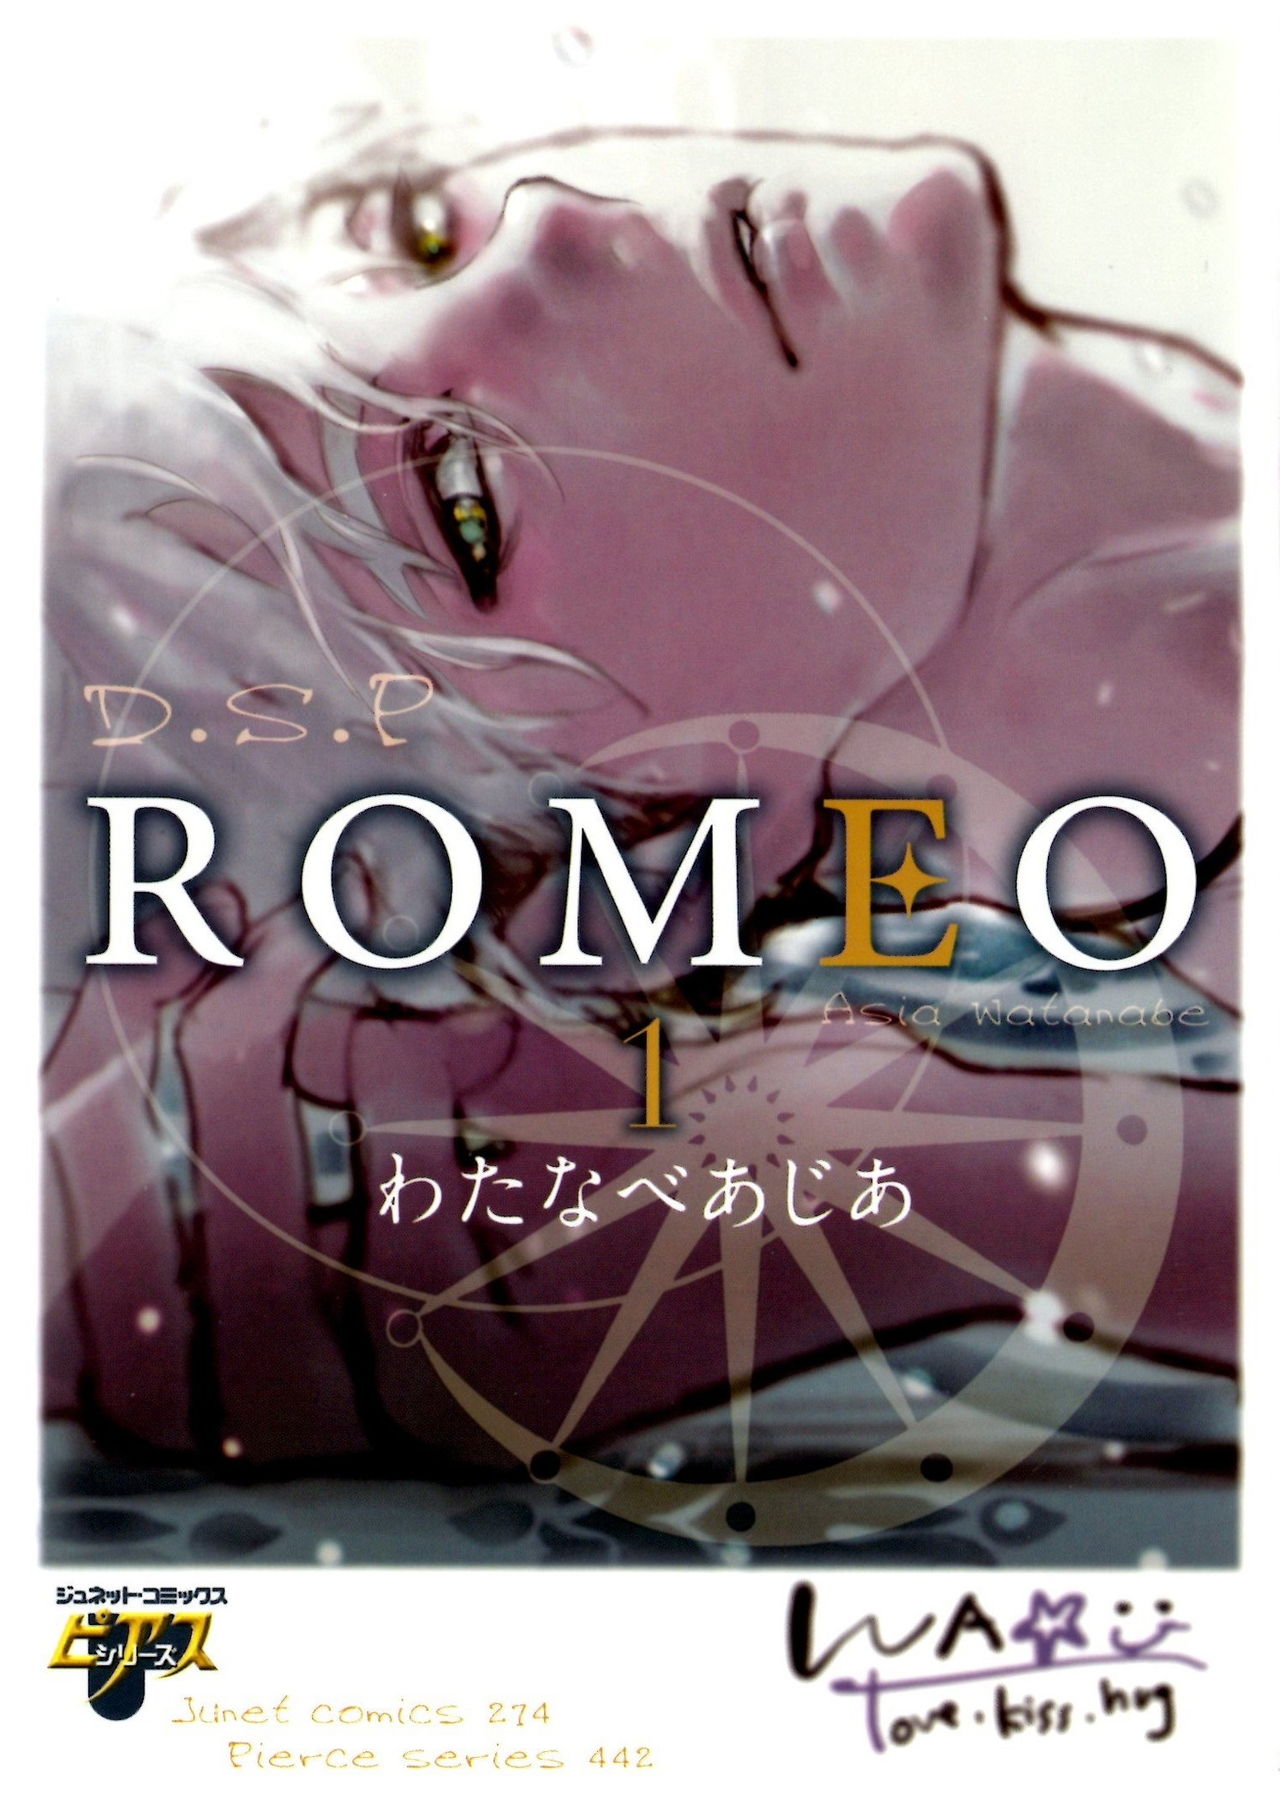 [Watanabe Asia] D.S.P Romeo [わたなべあじあ] D.S.P Romeo